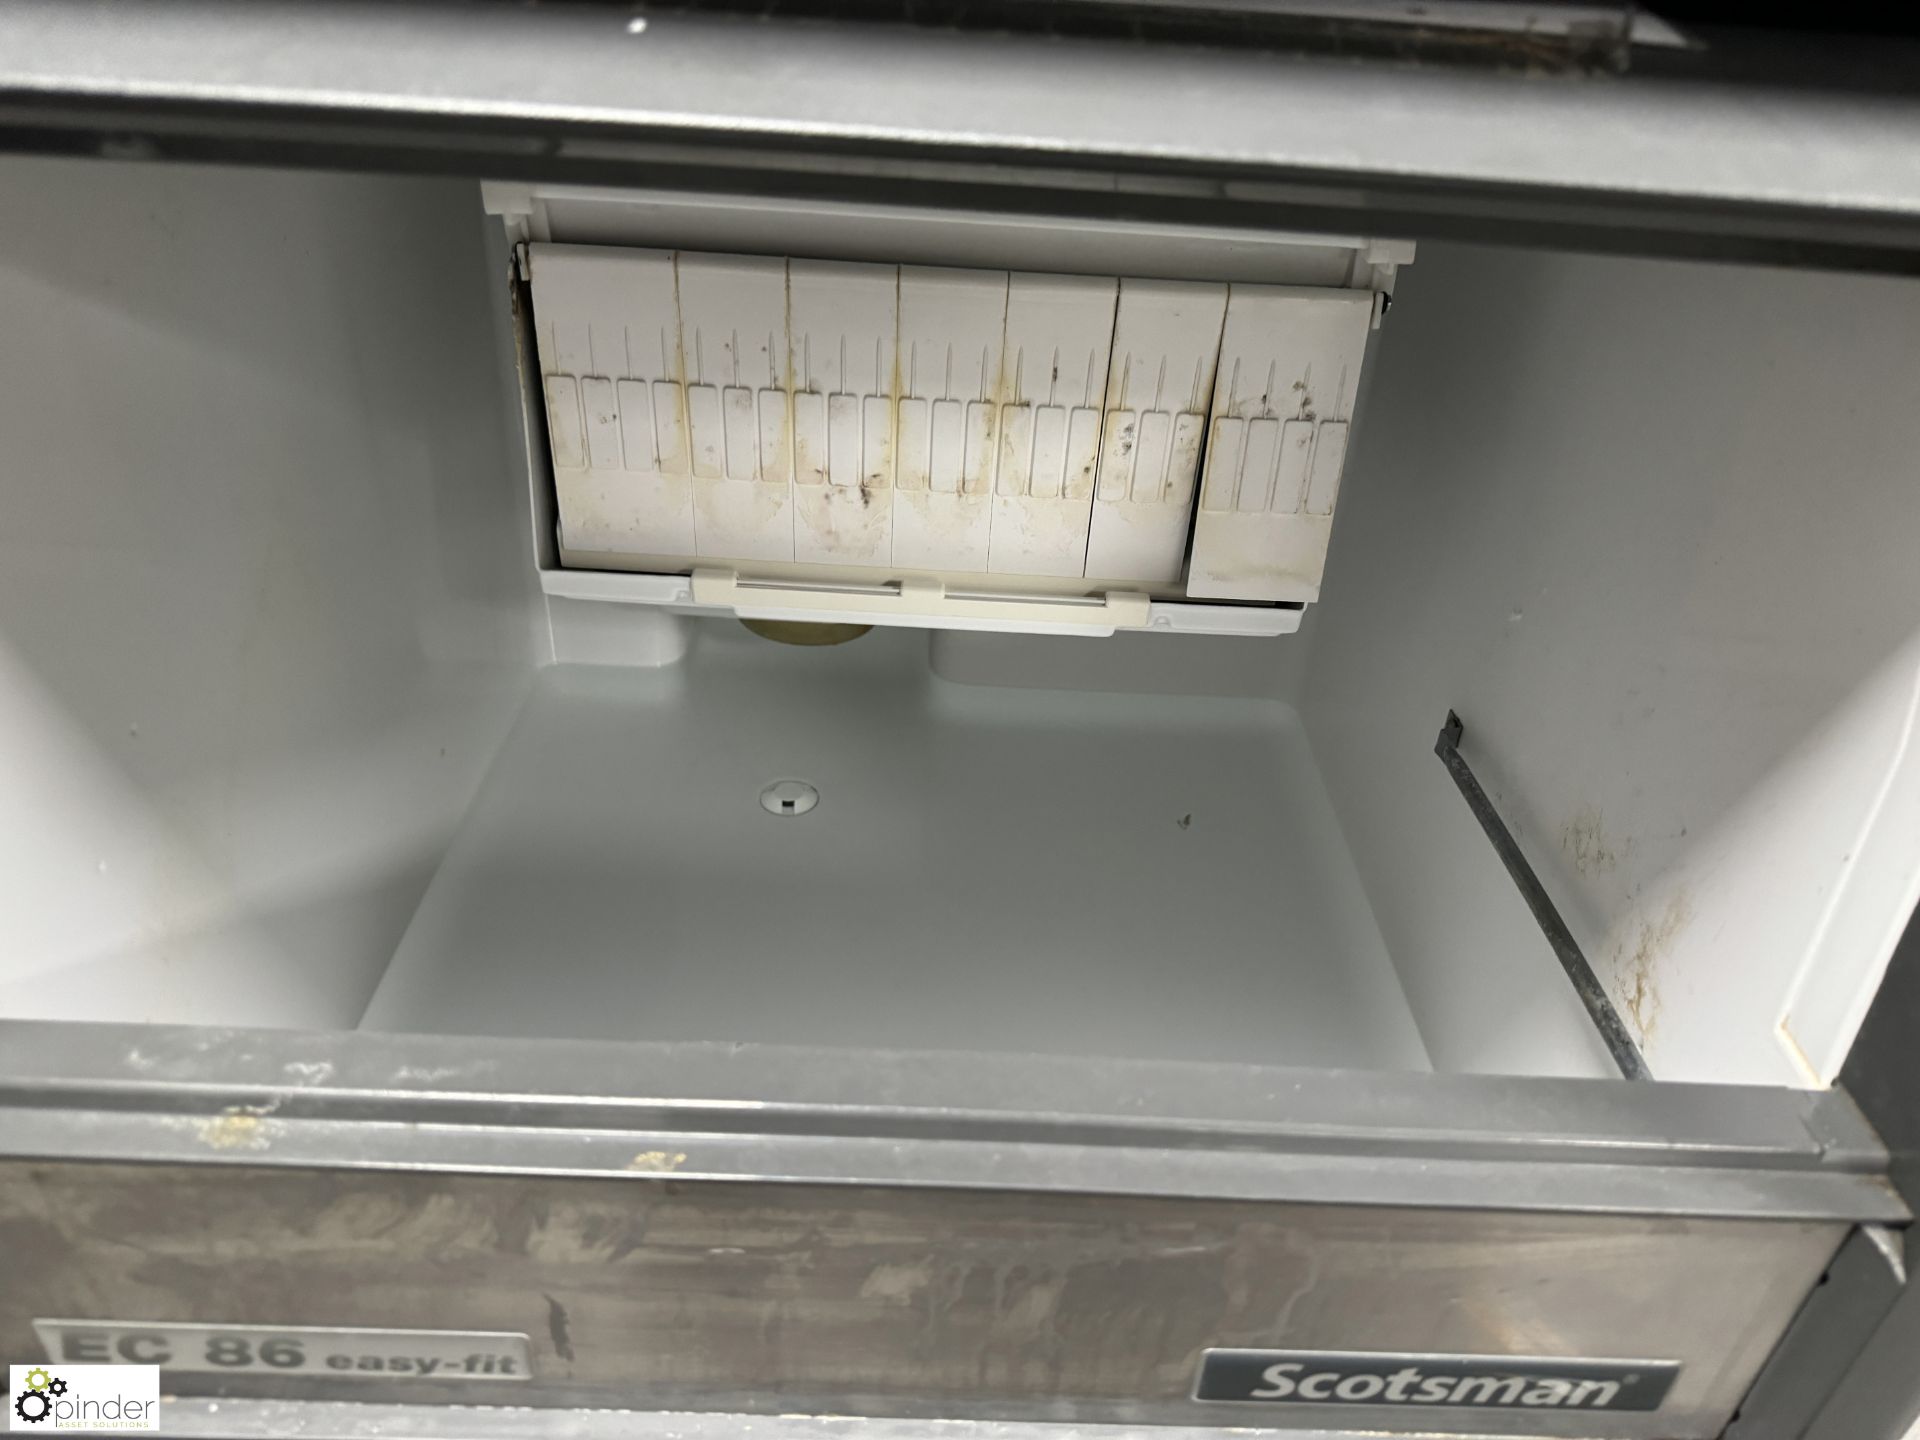 Scotsman EC86 EasyFit Ice Machine (location in building – basement kitchen 2) - Image 2 of 4